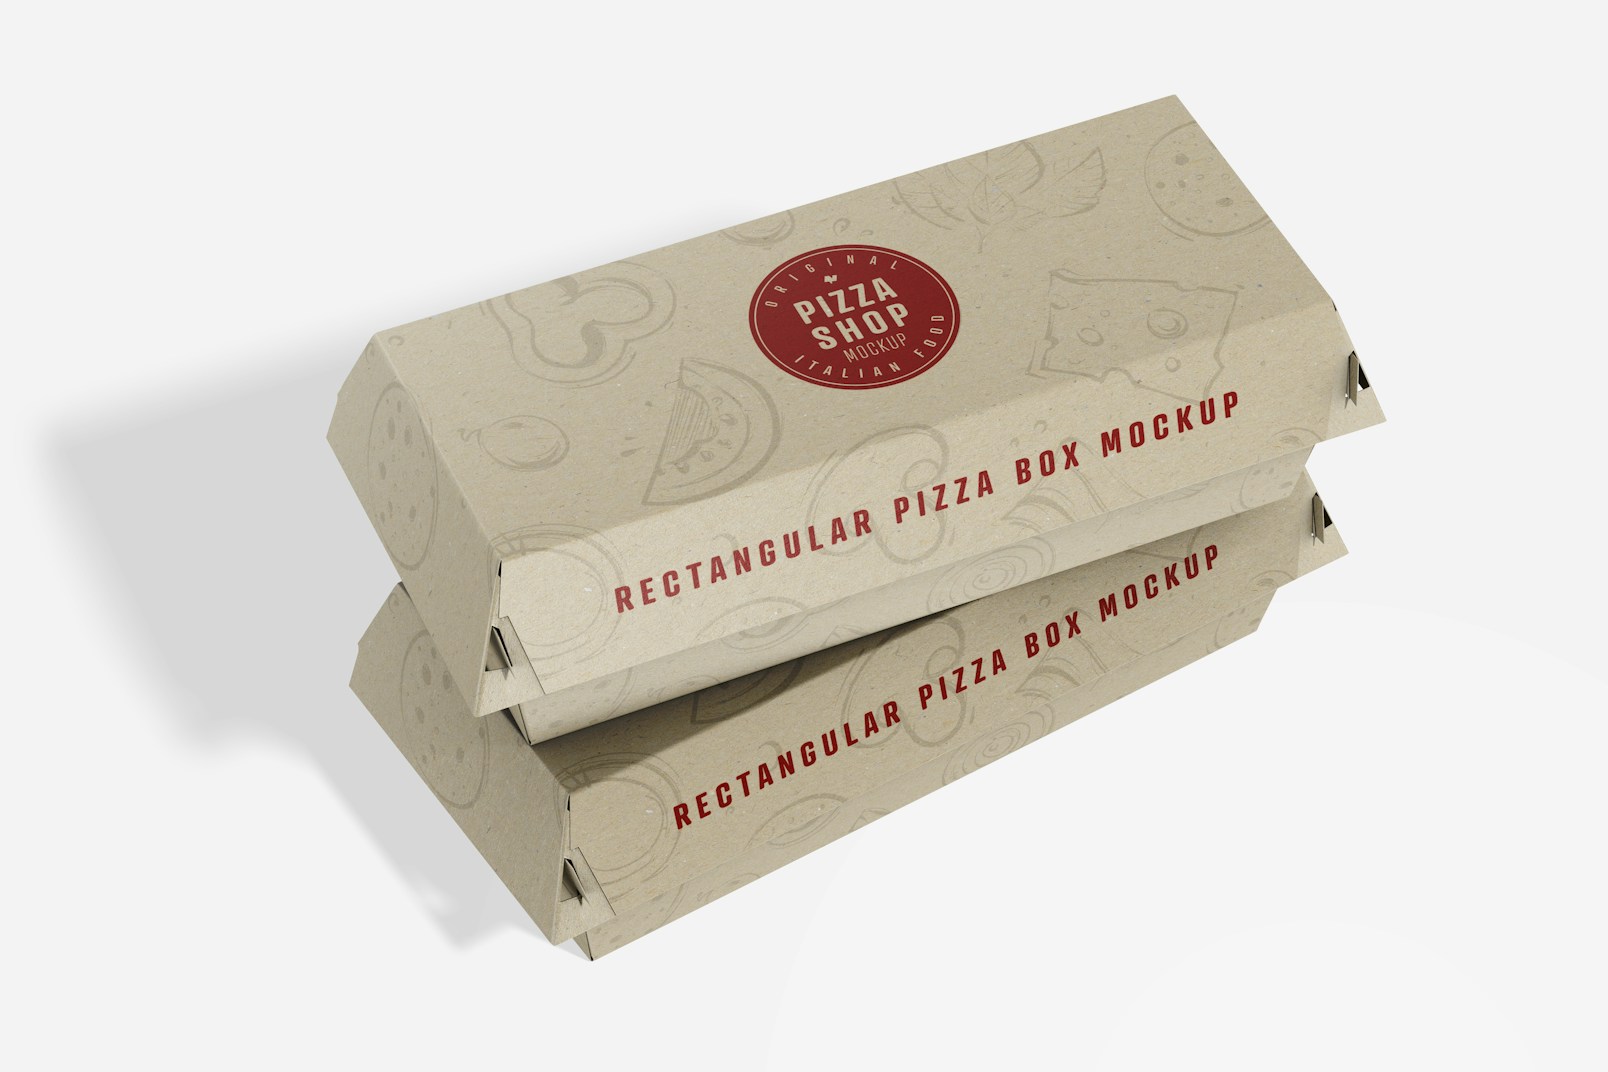 Rectangular Pizza Boxes Mockup, Stacked